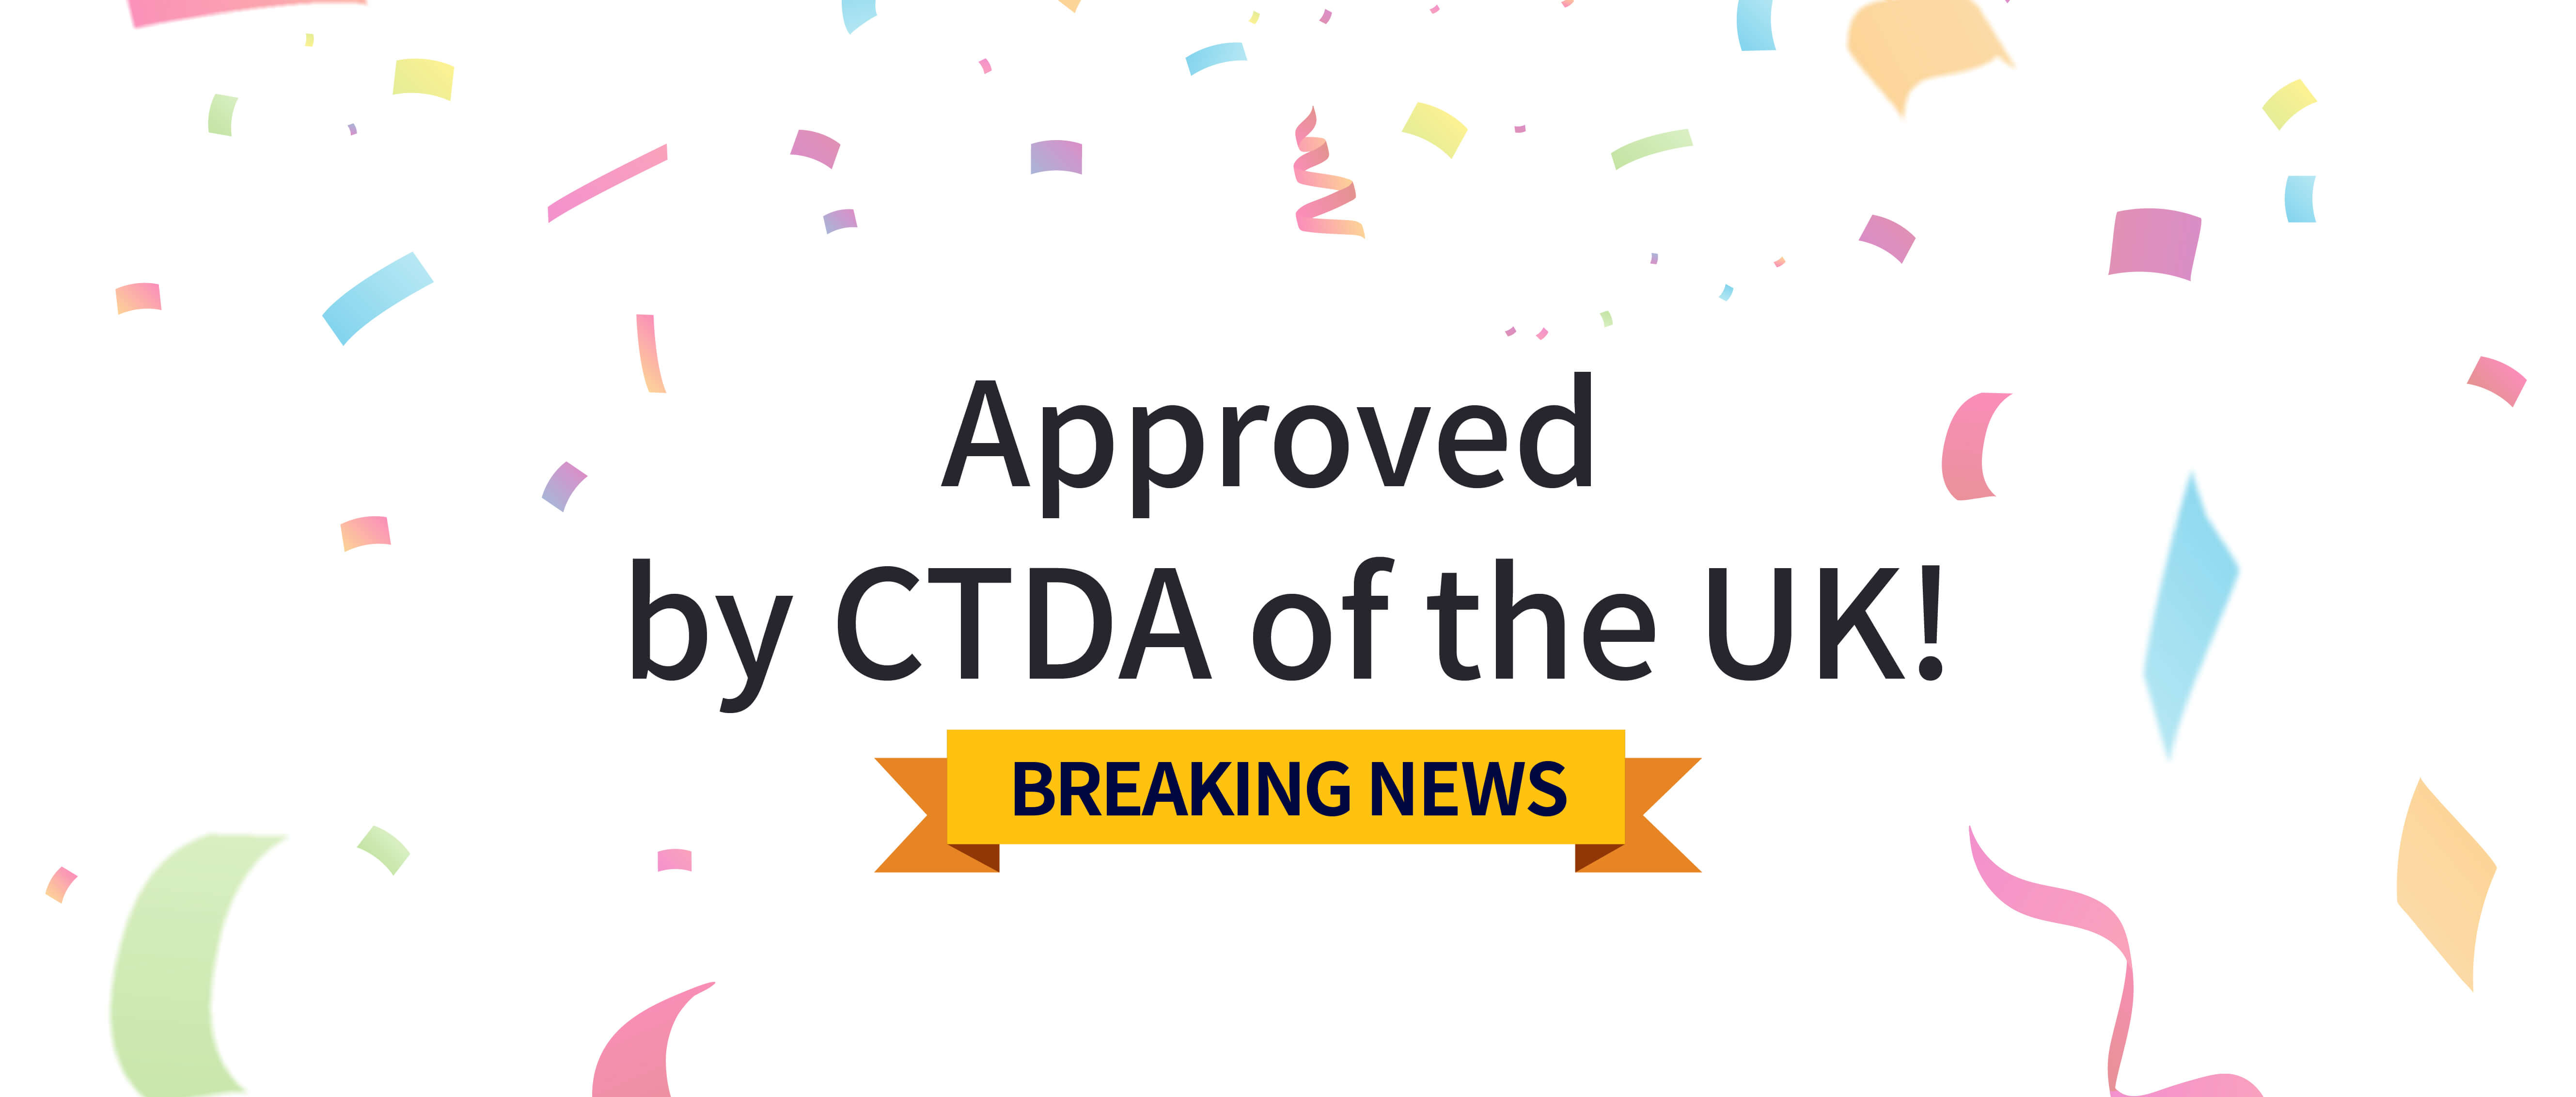 Самотестирование антигена getein sars-cov-2 сертифицировано CTDA Великобритании
